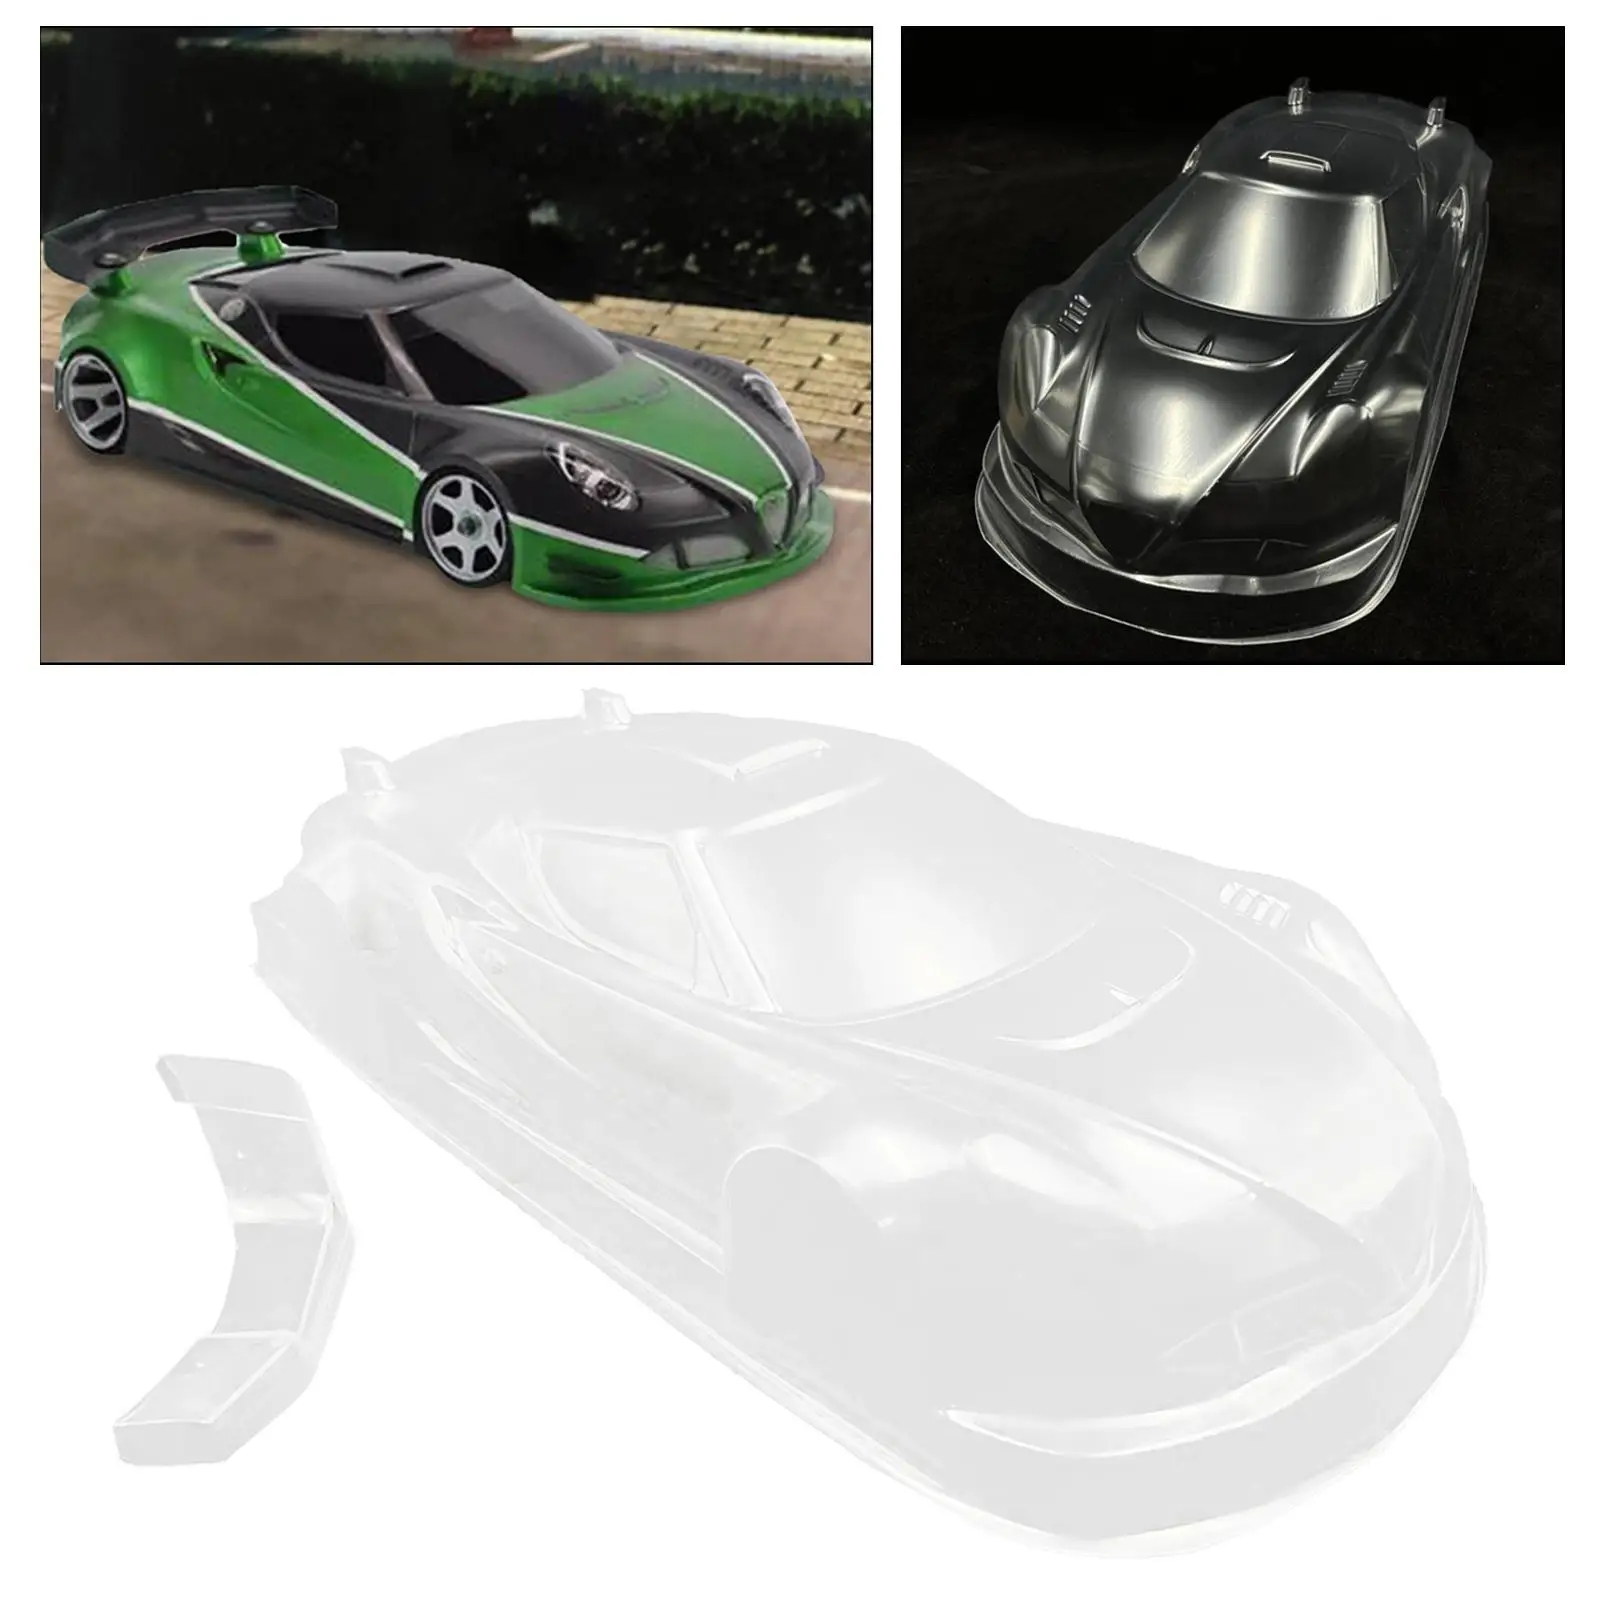 RC Drifting Touring Car Body Shell Кузова Автомобилей/Грузовиков Крыло 208 мм Колесная База RC Car Body Shell для RC Автомобилей Запасные Части Аксессуары